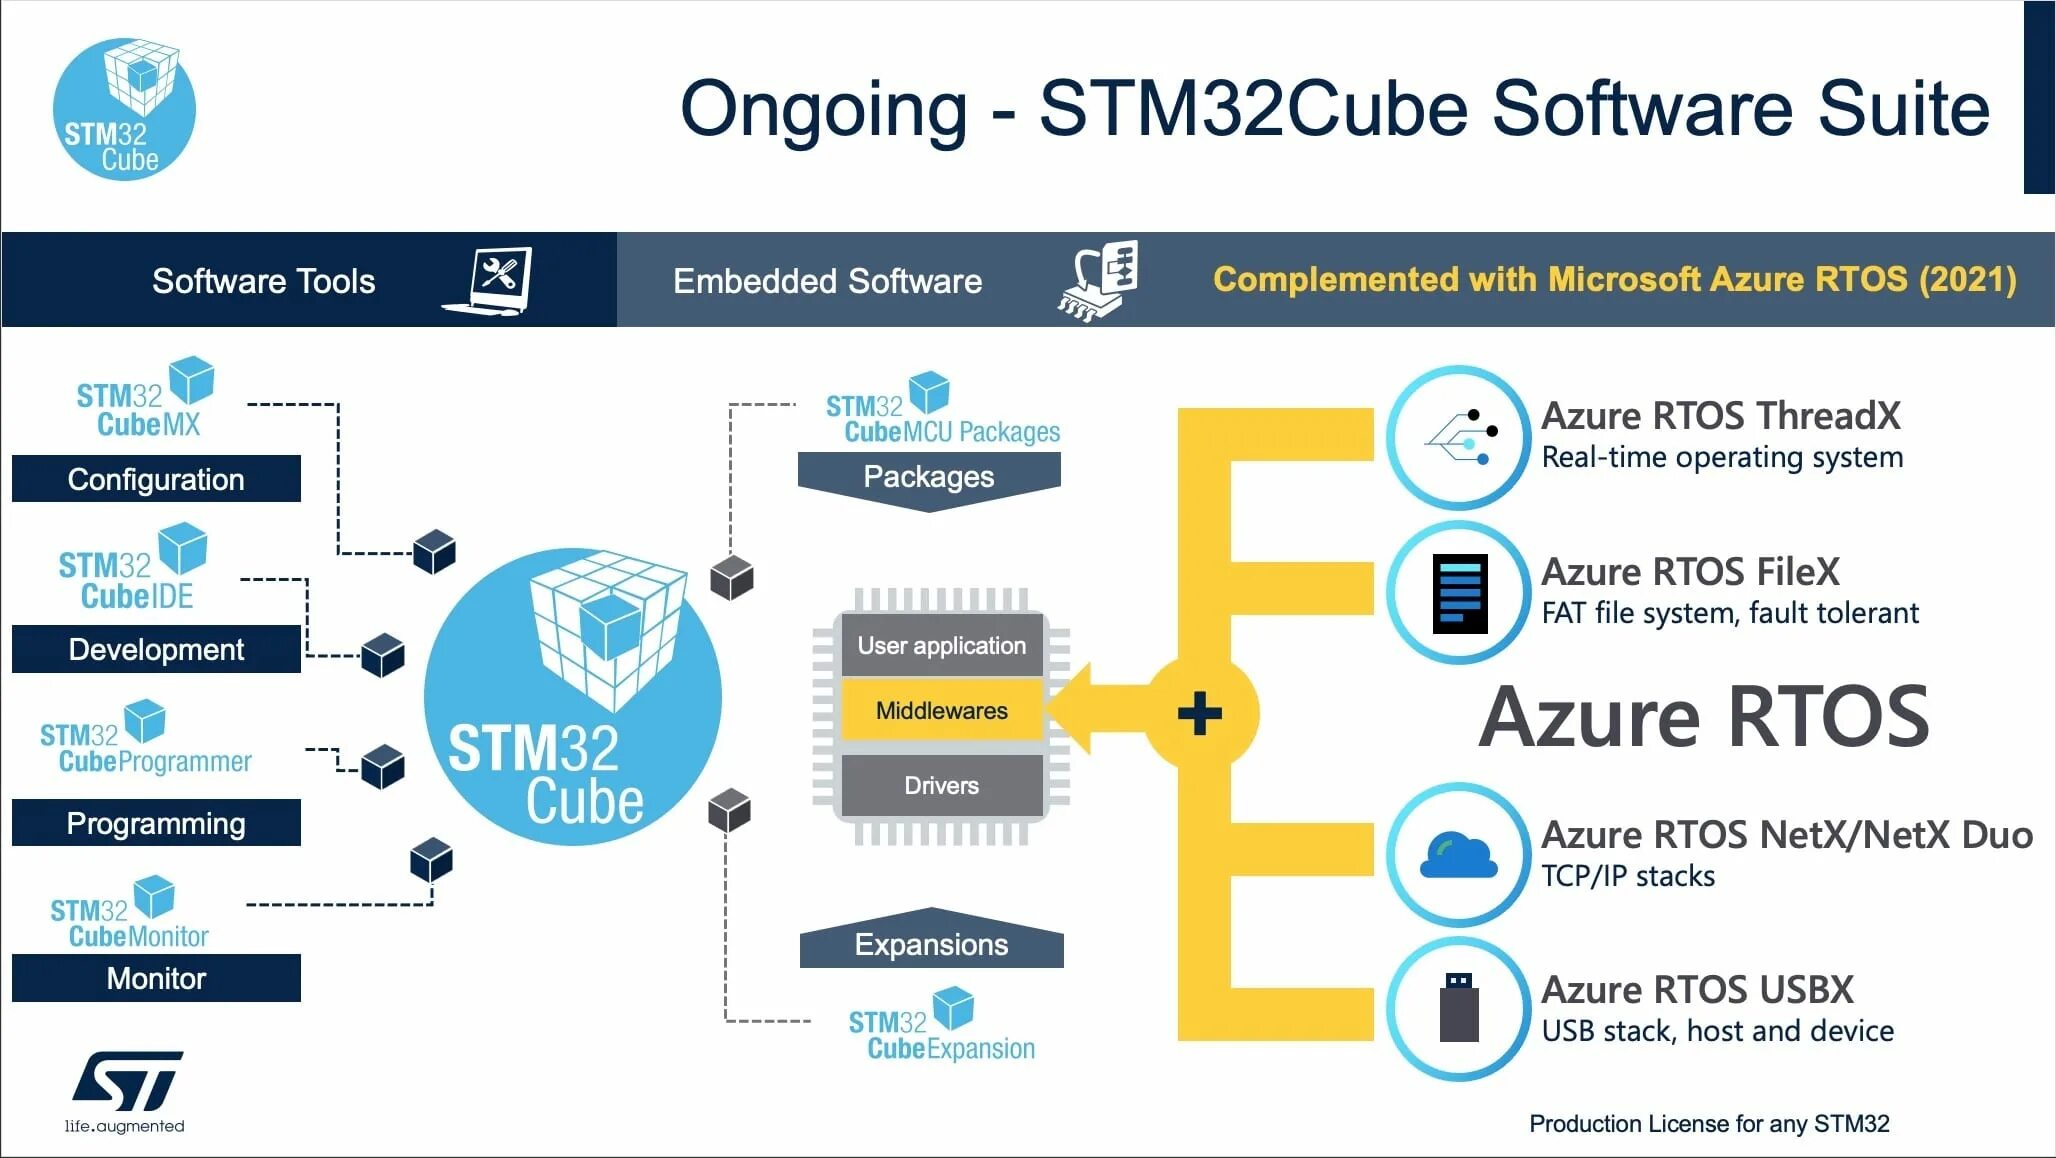 Stm32 cube programmer. Azure RTOS. Stm32 Cube Monitor. Microsoft Azure RTOS. Операционная система THREADX.